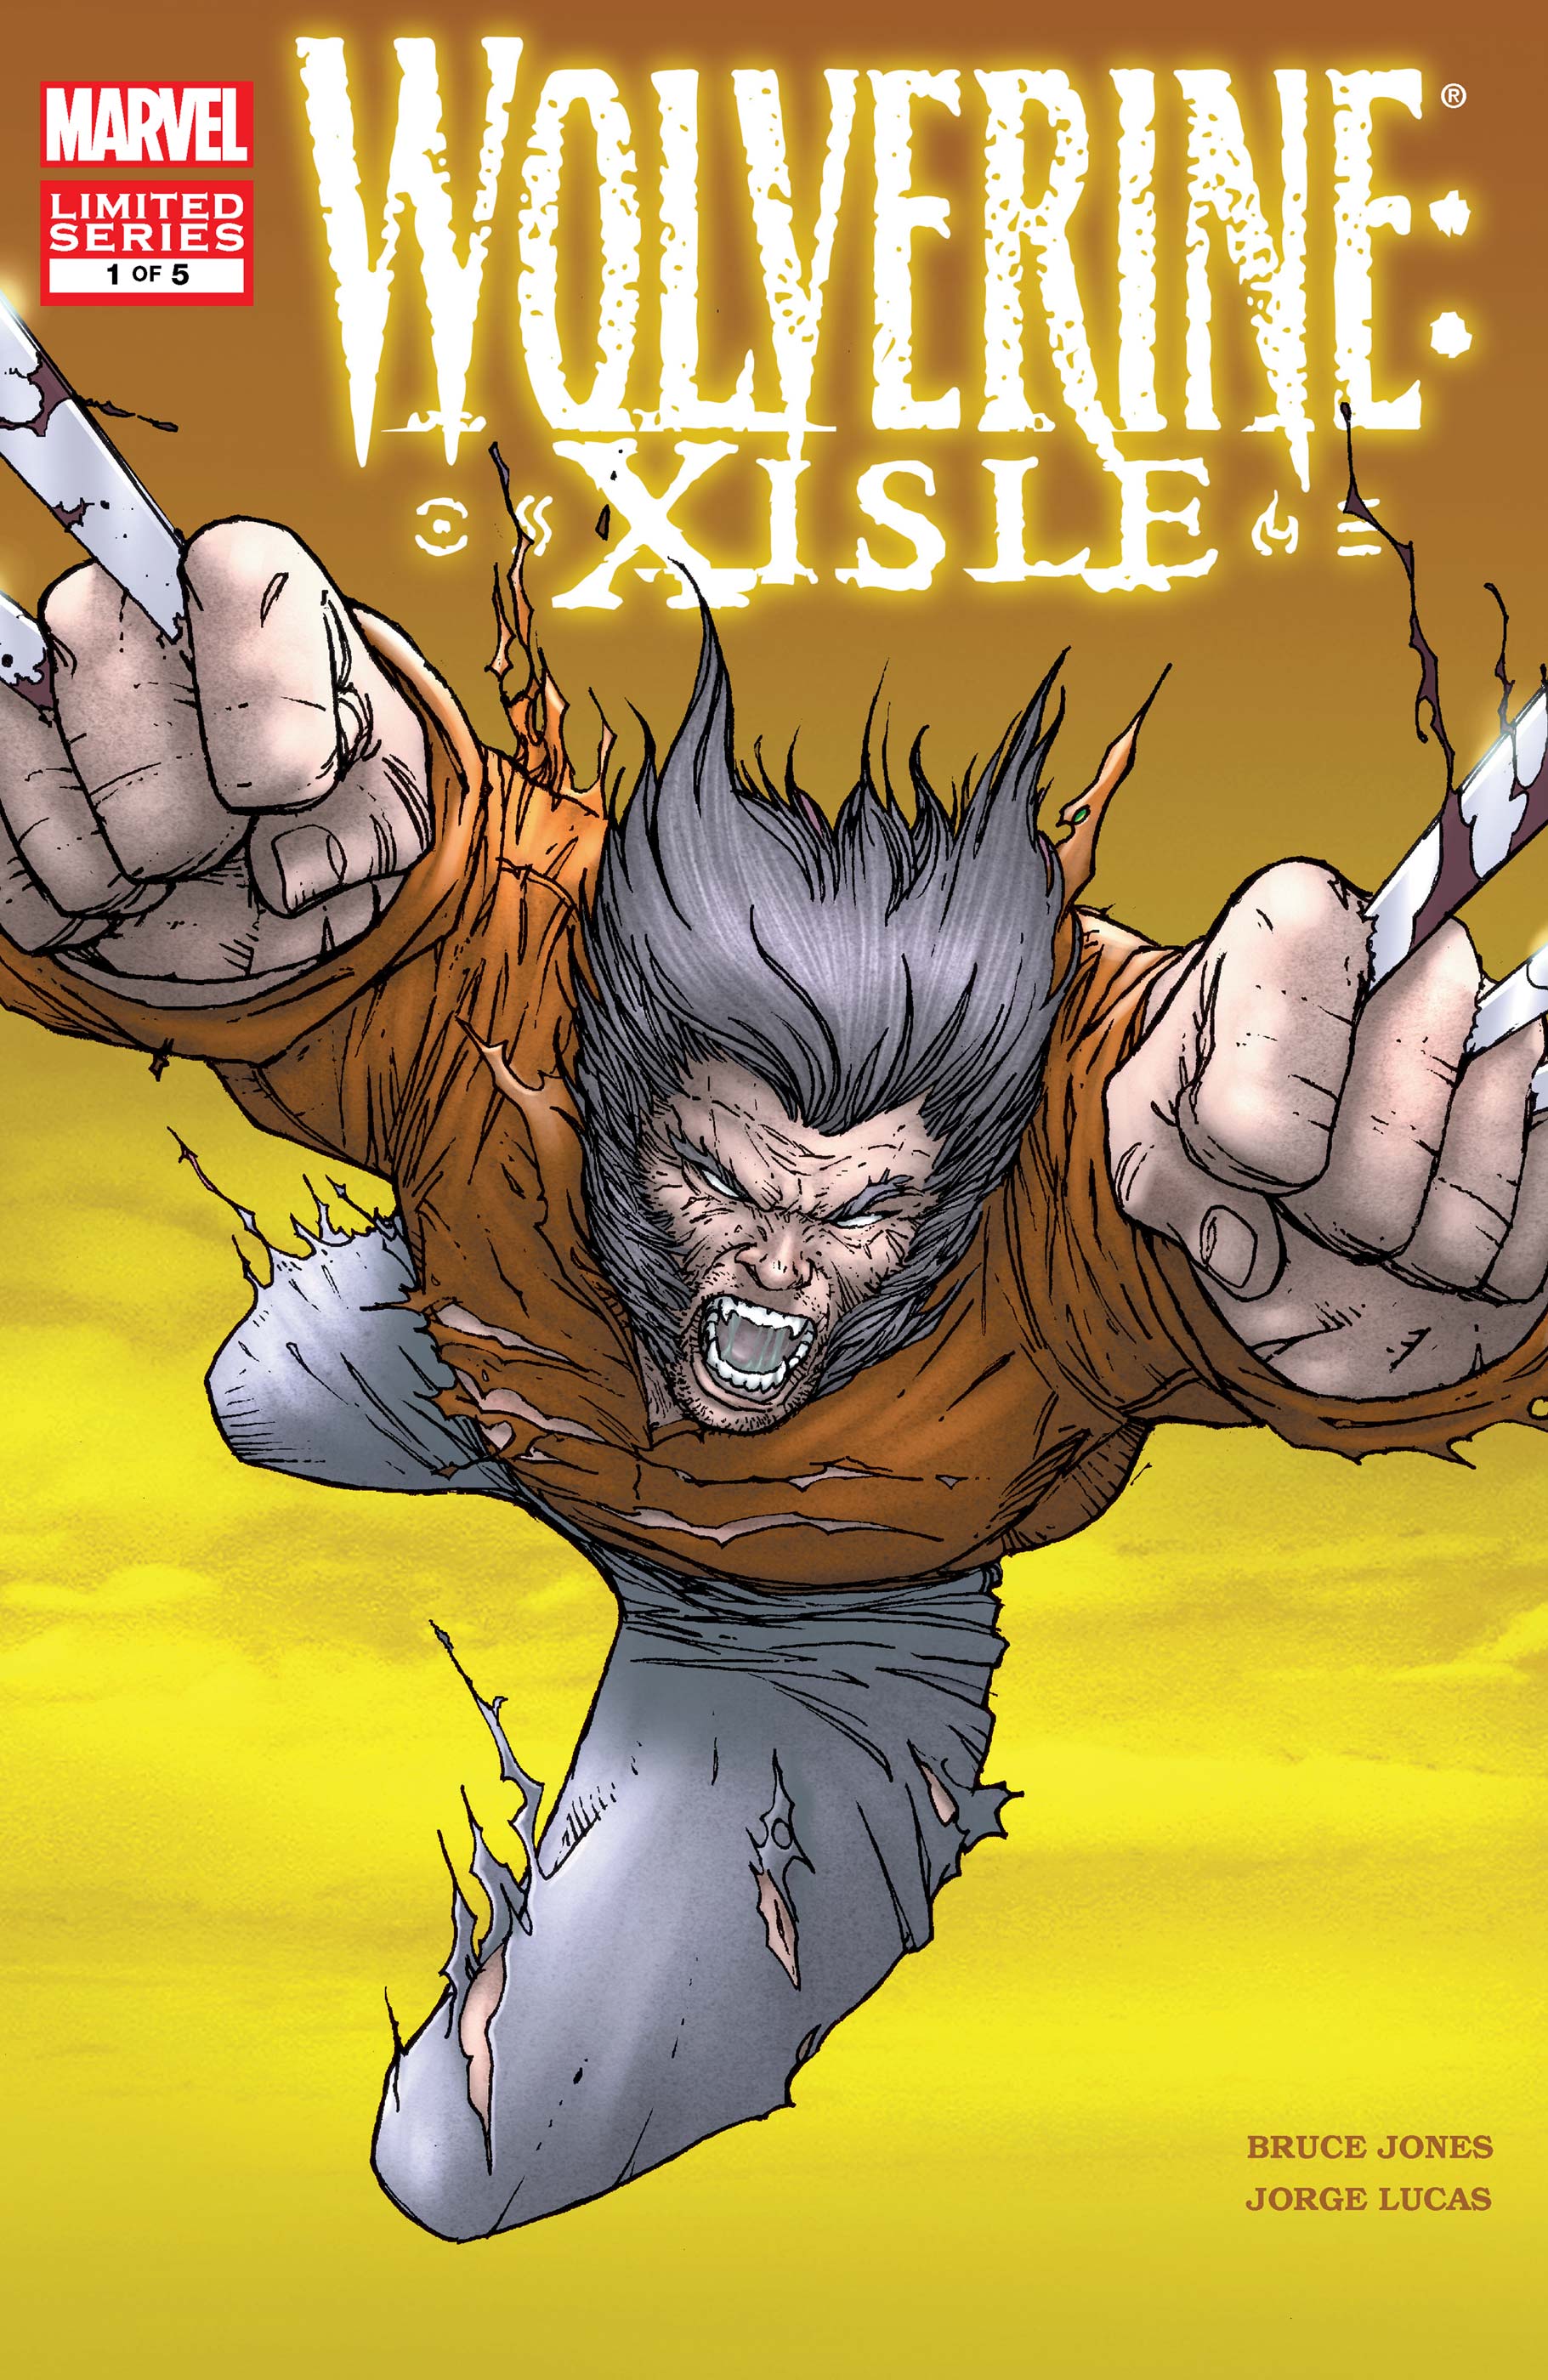 Wolverine: Xisle (2003) #1